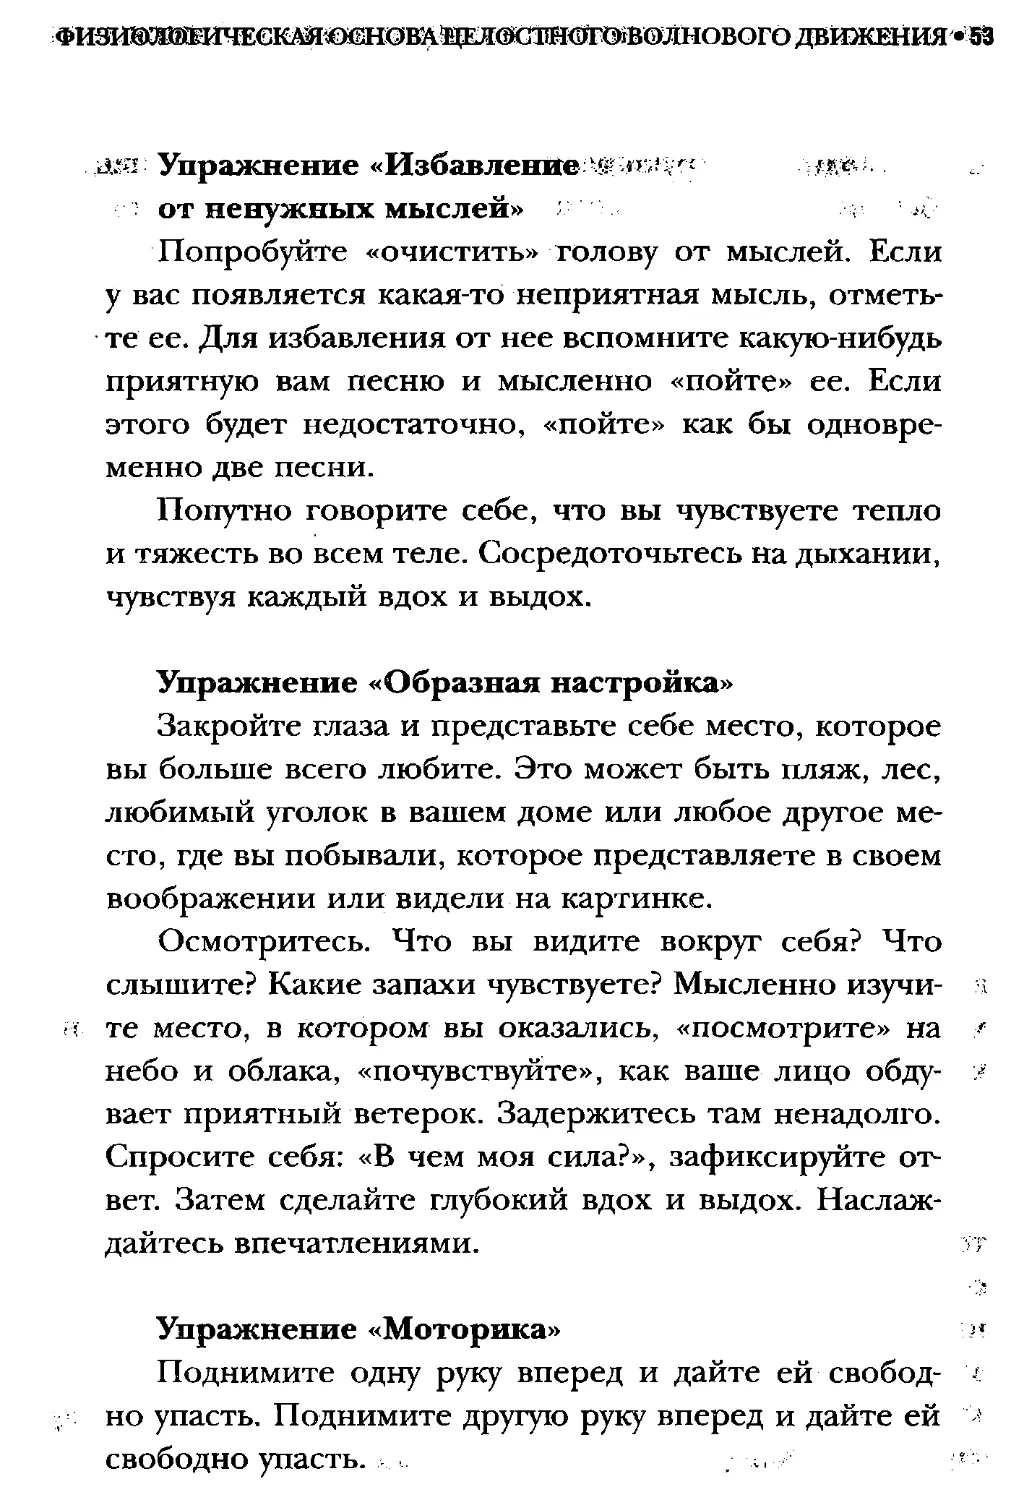 ﻿СлавянеТекст_page0026_2